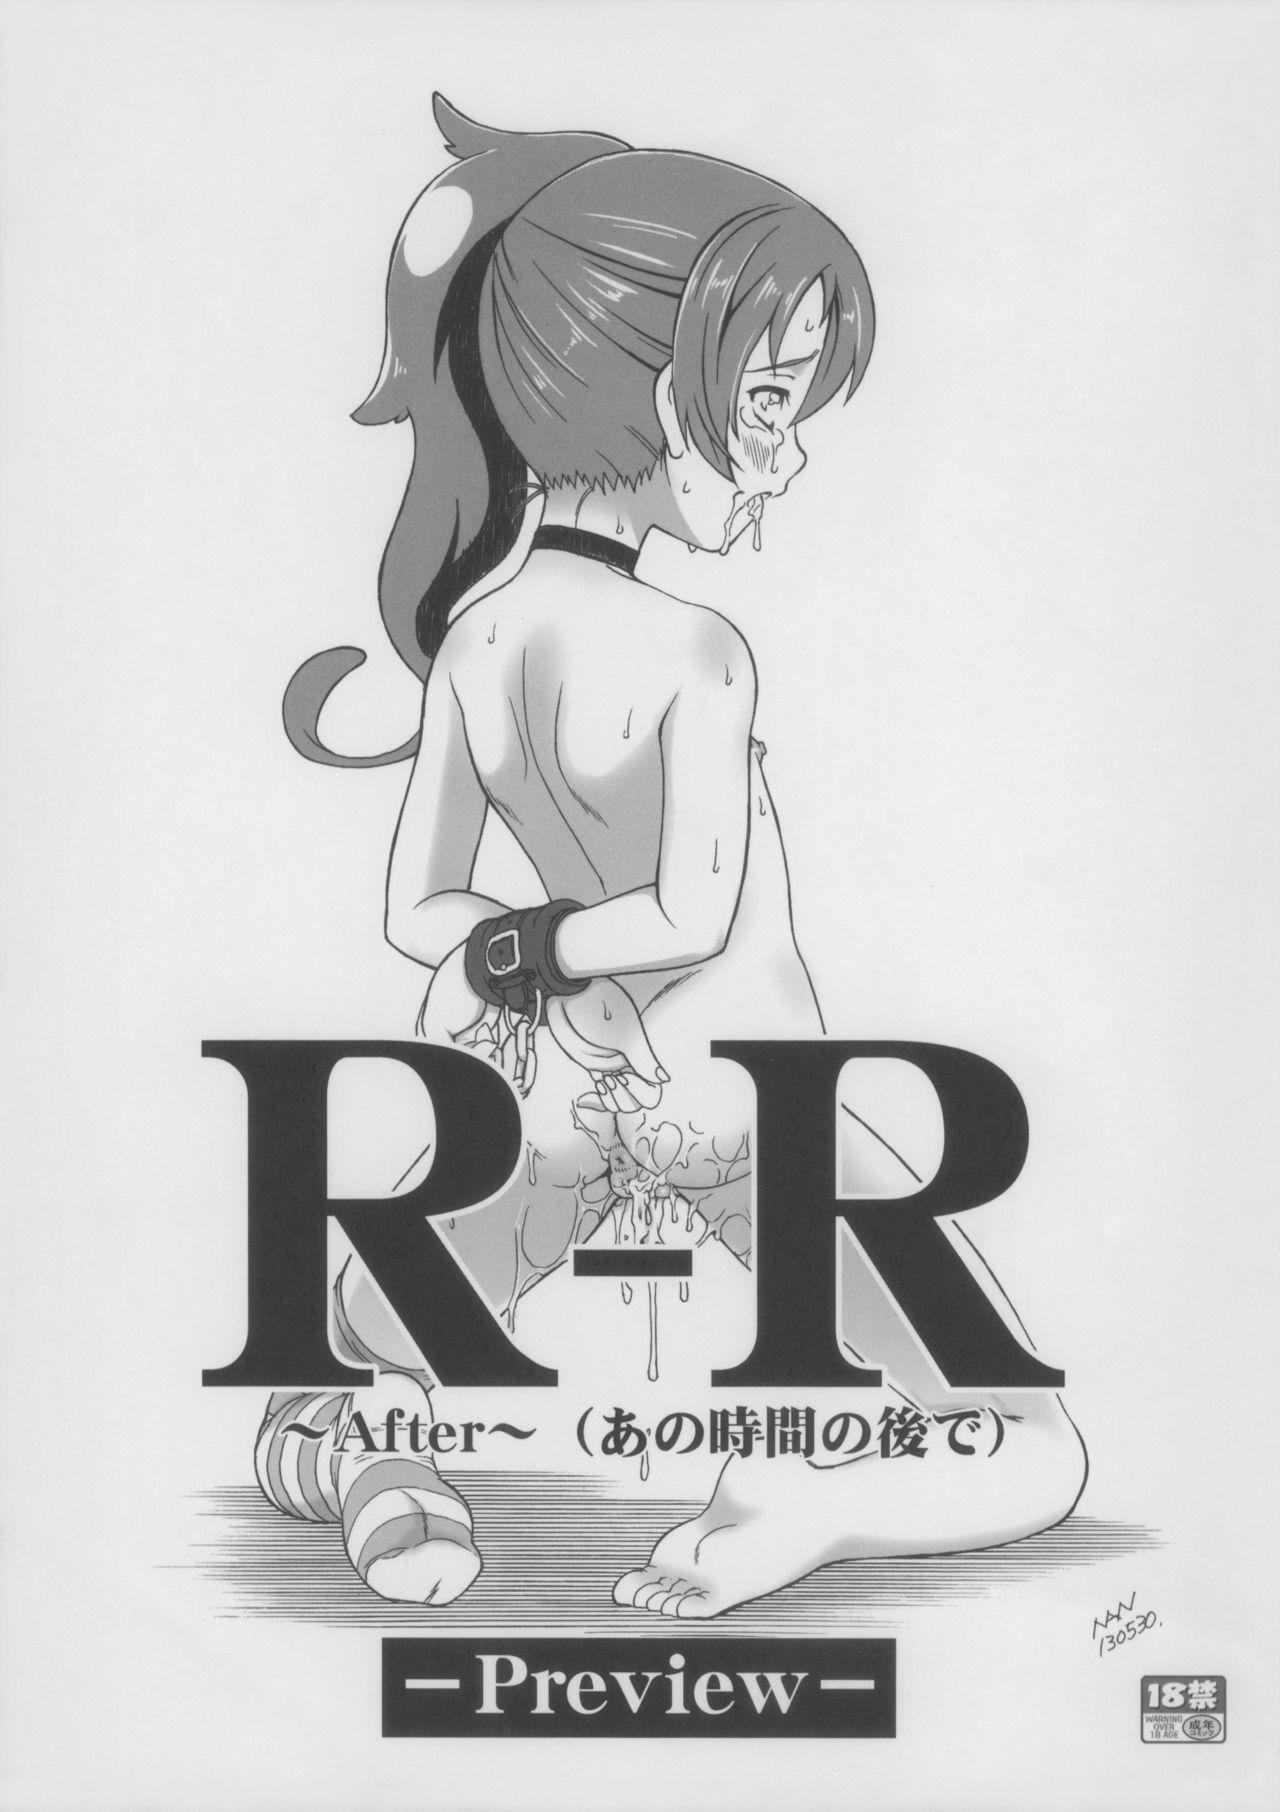 Masterbate (Puniket 27) [Idenshi no Fune (Nanjou Asuka)] R-R ~After~ (Ano Jikan no Ato de) -Preview- (Chousoku Henkei Gyrozetter) - Chousoku henkei gyrozetter Close - Picture 1